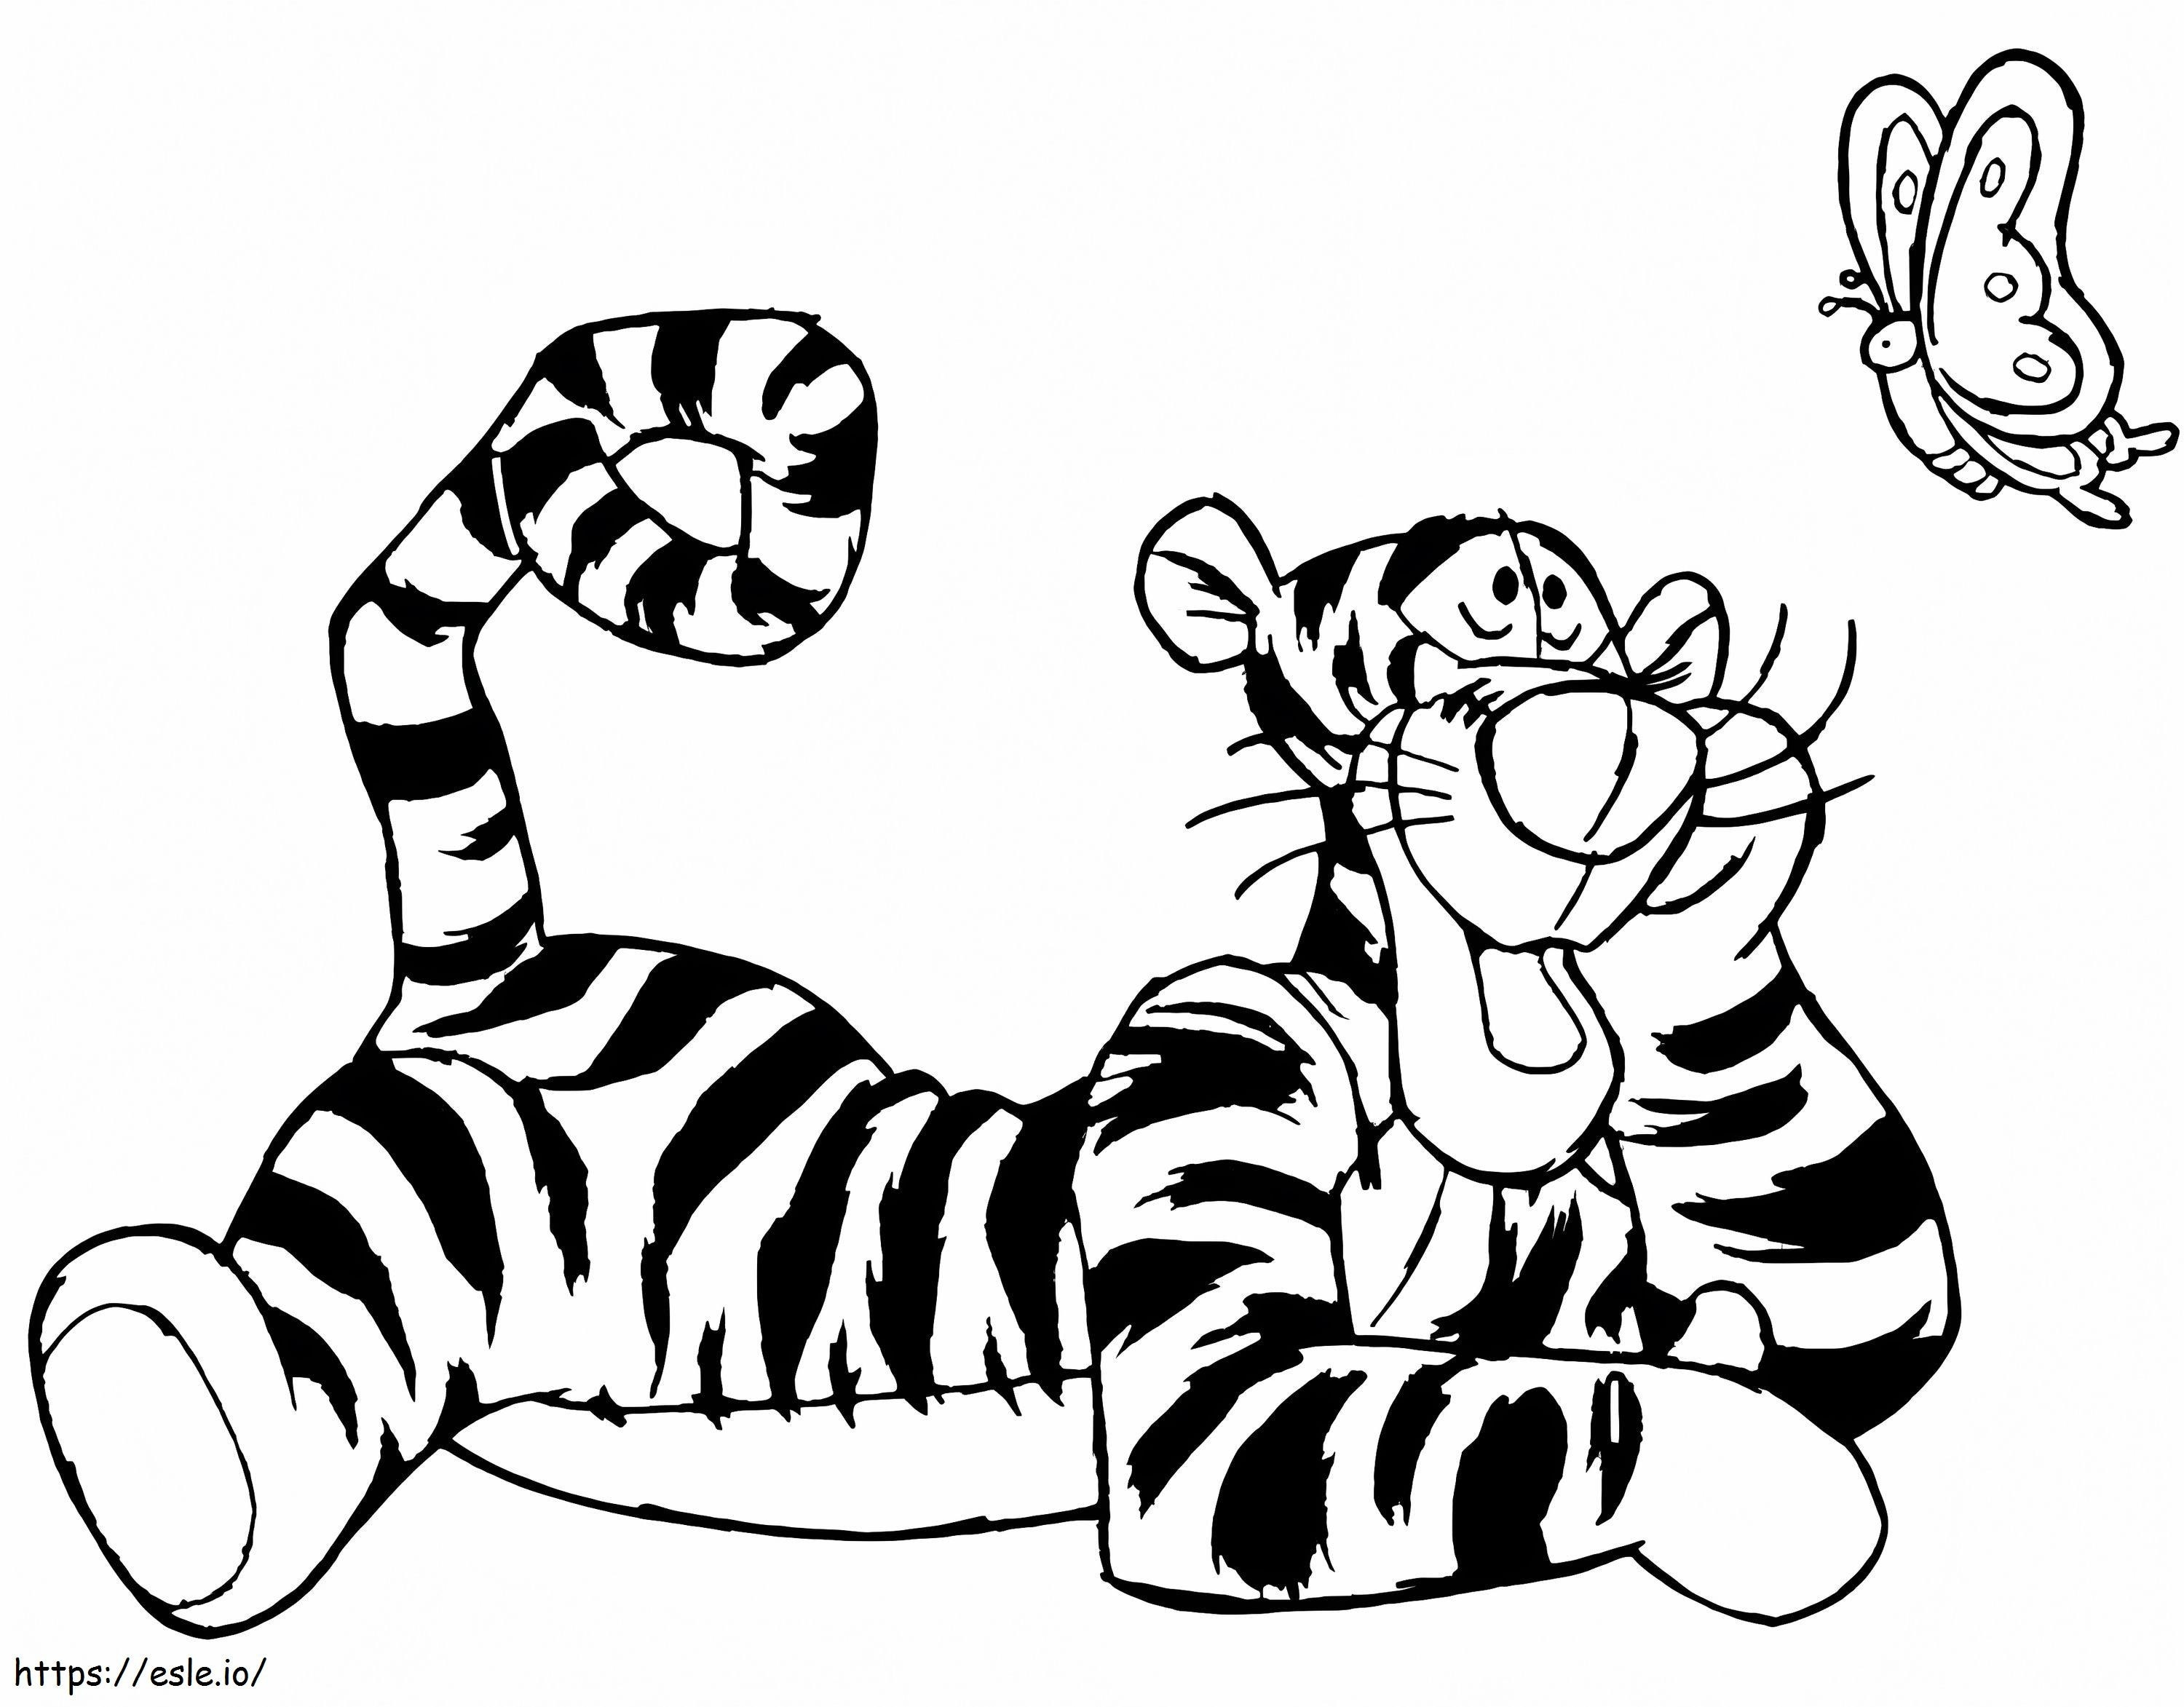 Tigre e borboleta para colorir